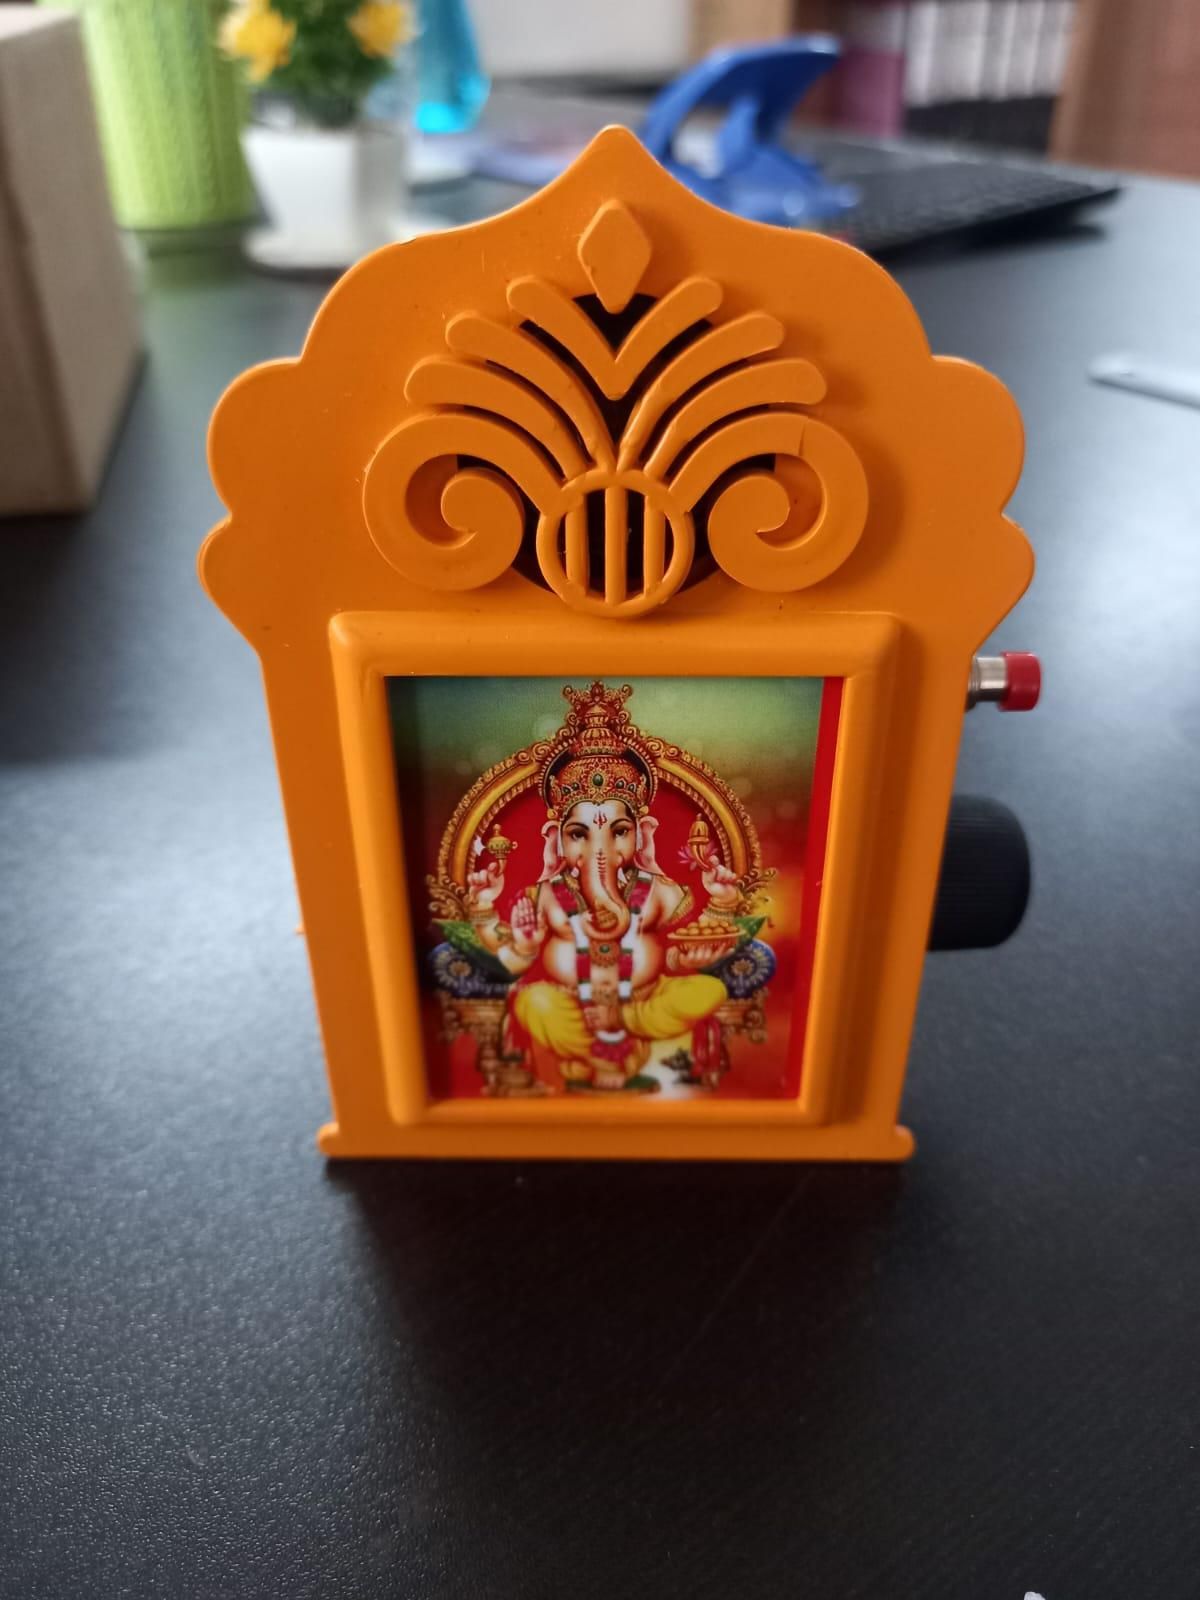 35 in1 ganesh Mantra Device Mantra Chanting Bel